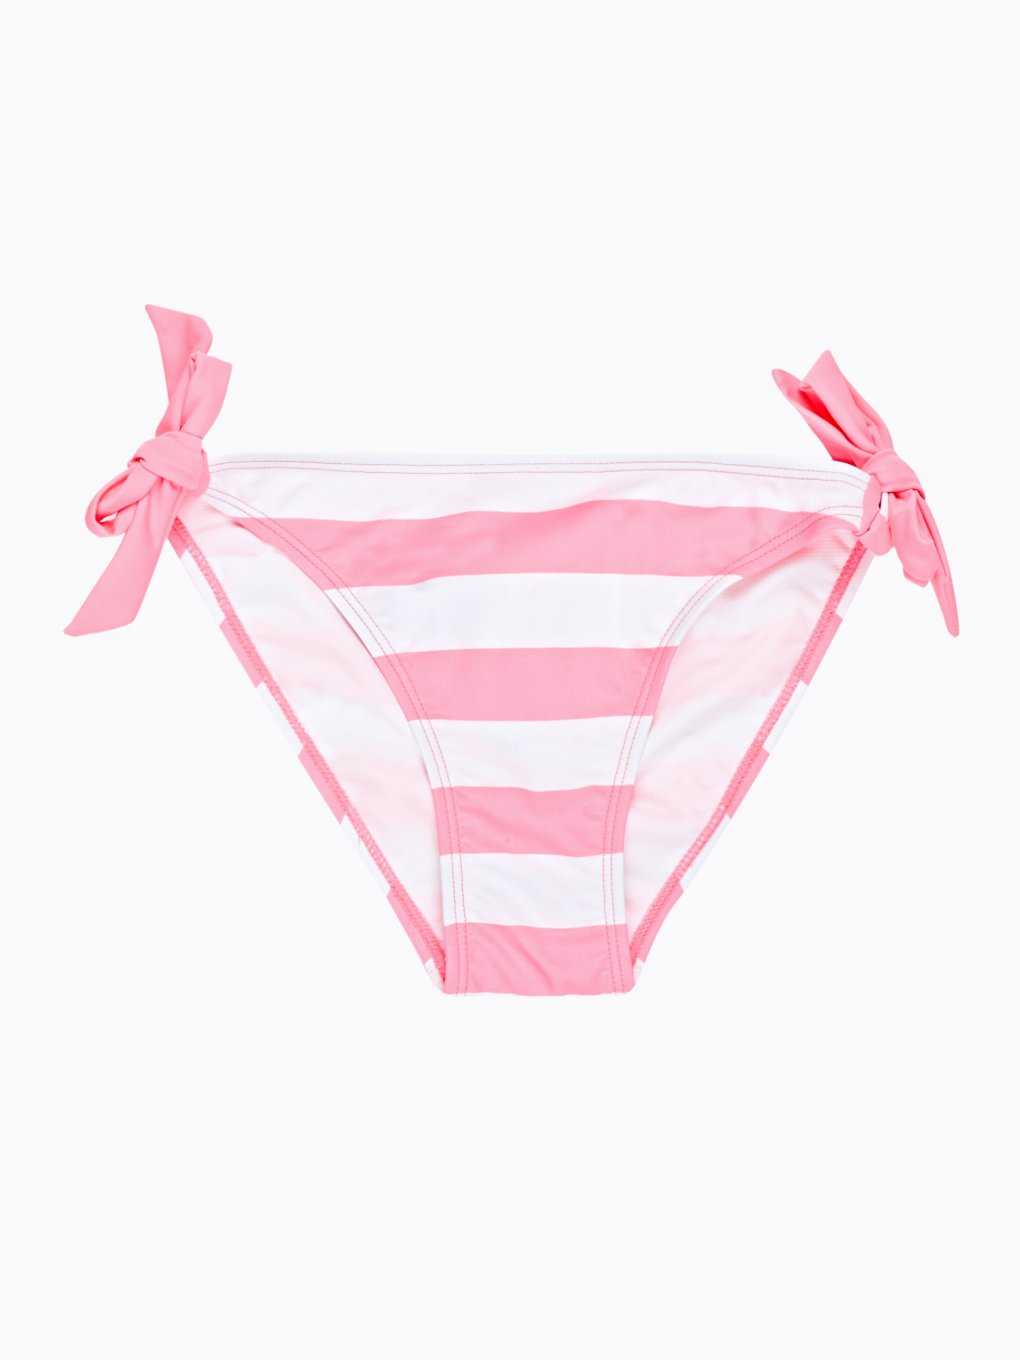 Striped bikini bottom